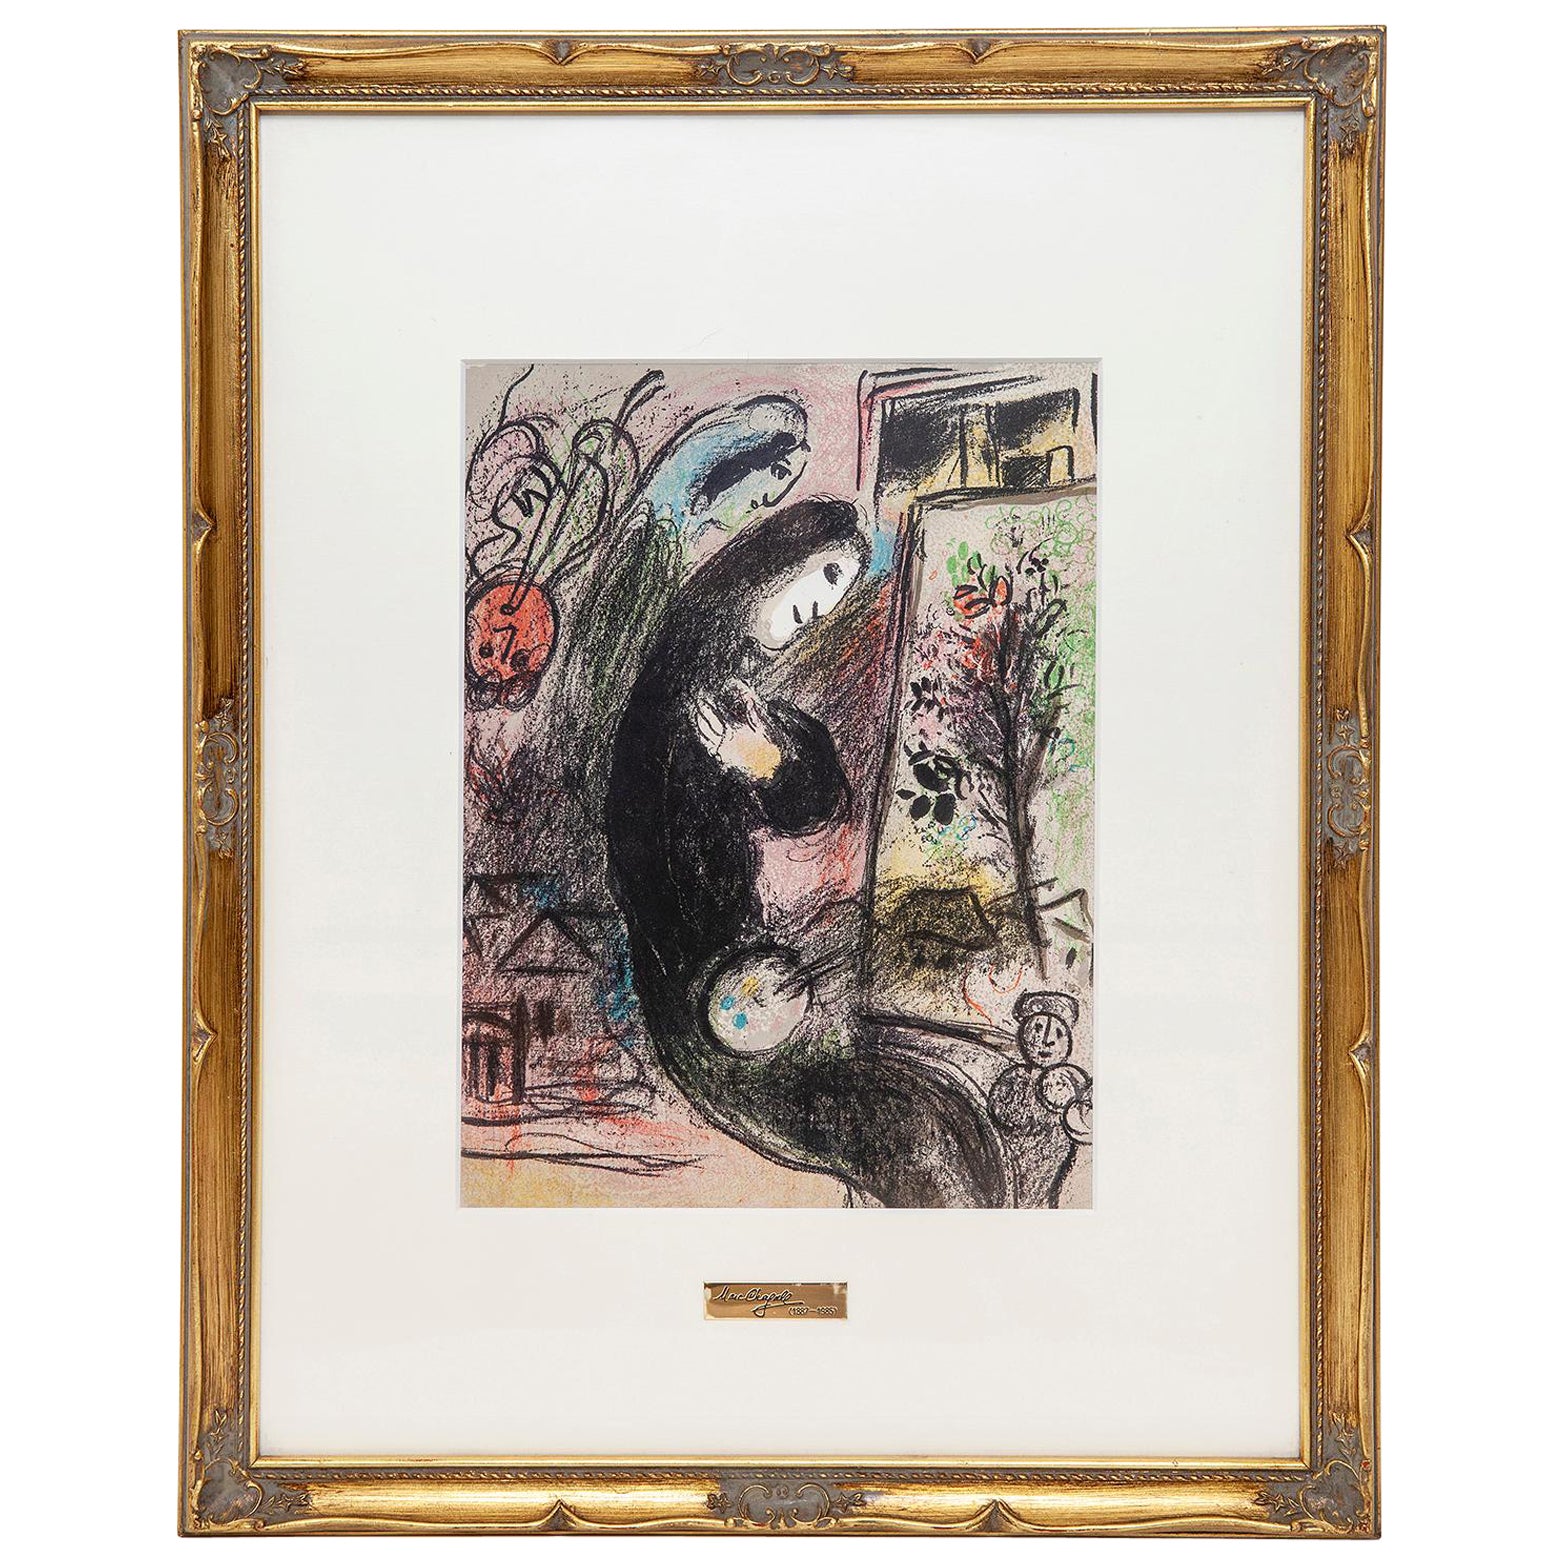 L'inspire Inspiration Self Portrait Chagall Lithographe no398 For Sale